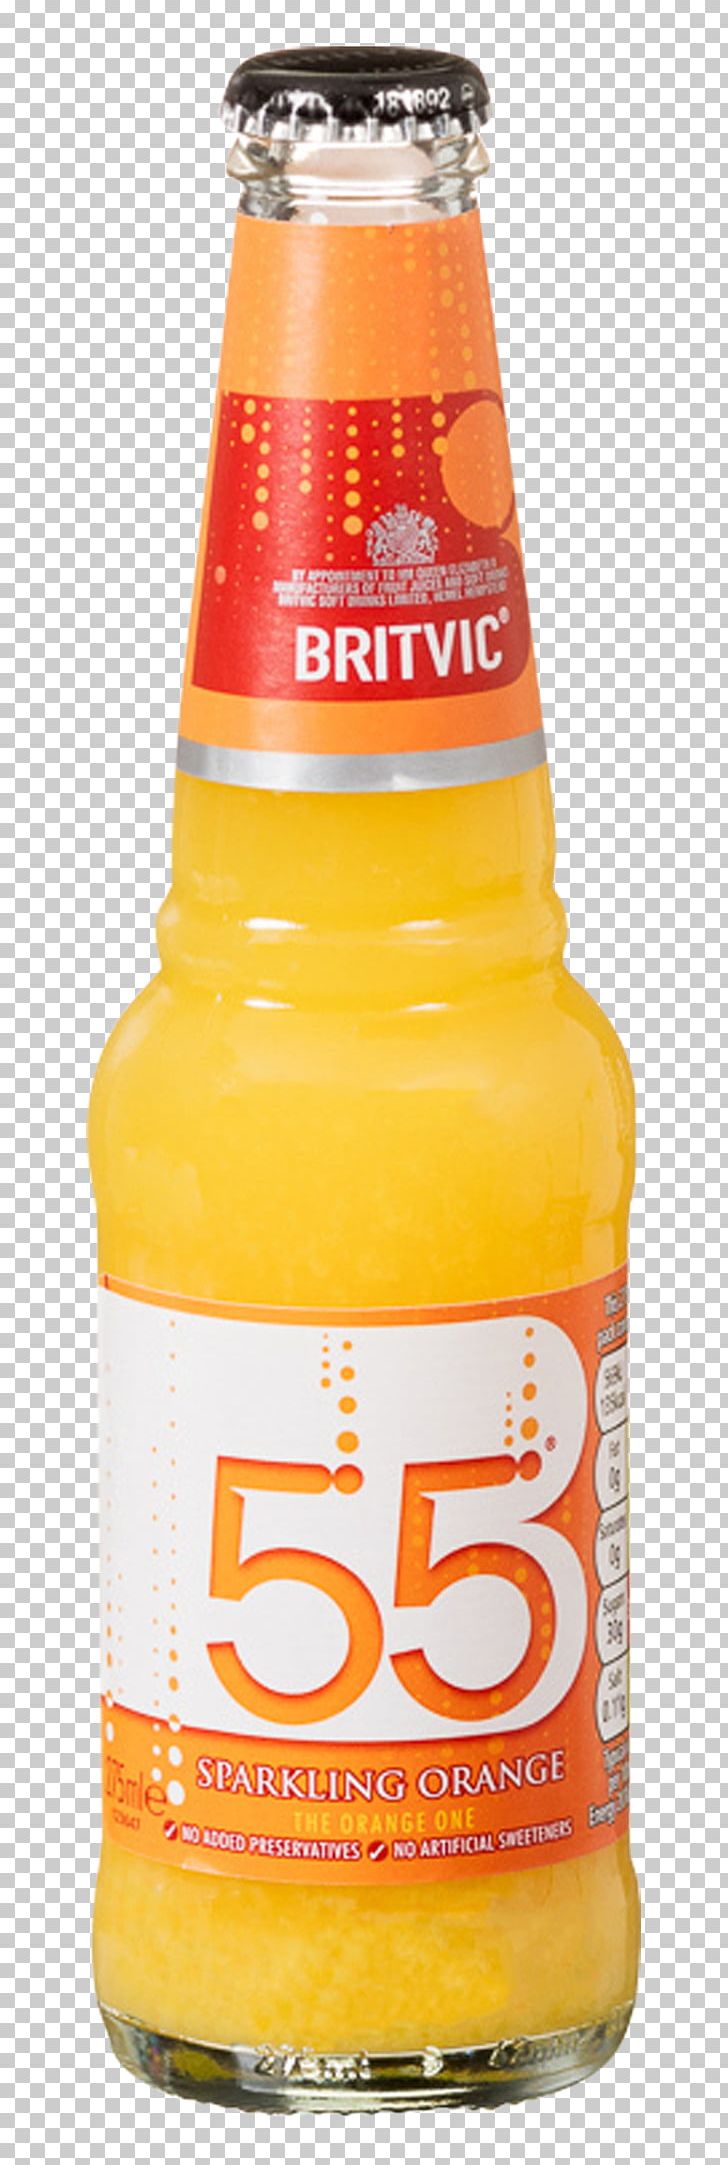 Orange Drink Juice Fizzy Drinks Orange Soft Drink Fuzzy Navel PNG, Clipart, Beer Bottle, Bottle, Britvic, Drink, Fizzy Drinks Free PNG Download